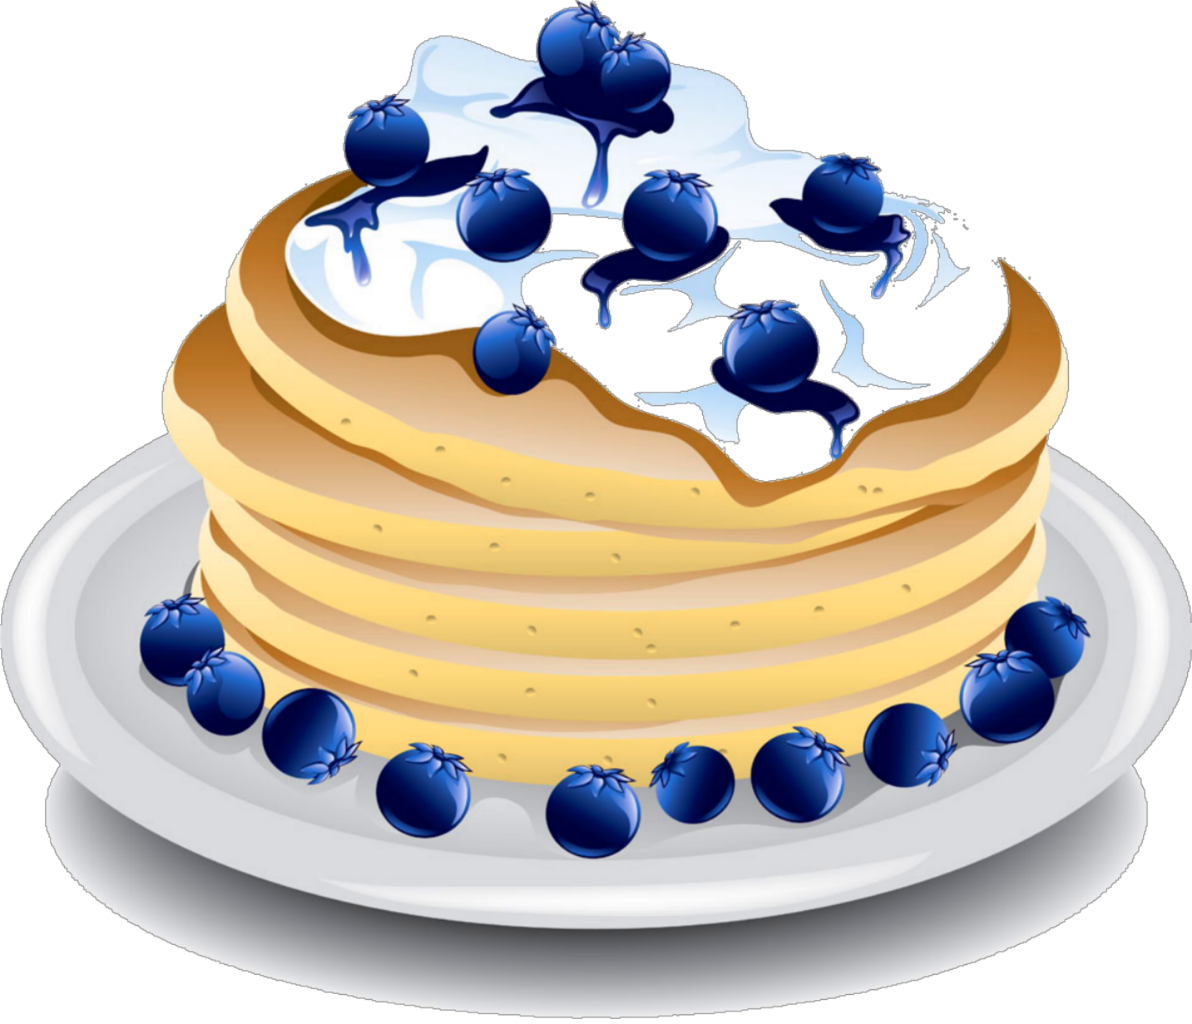 Blueberry Pancakes Illustration PNG image